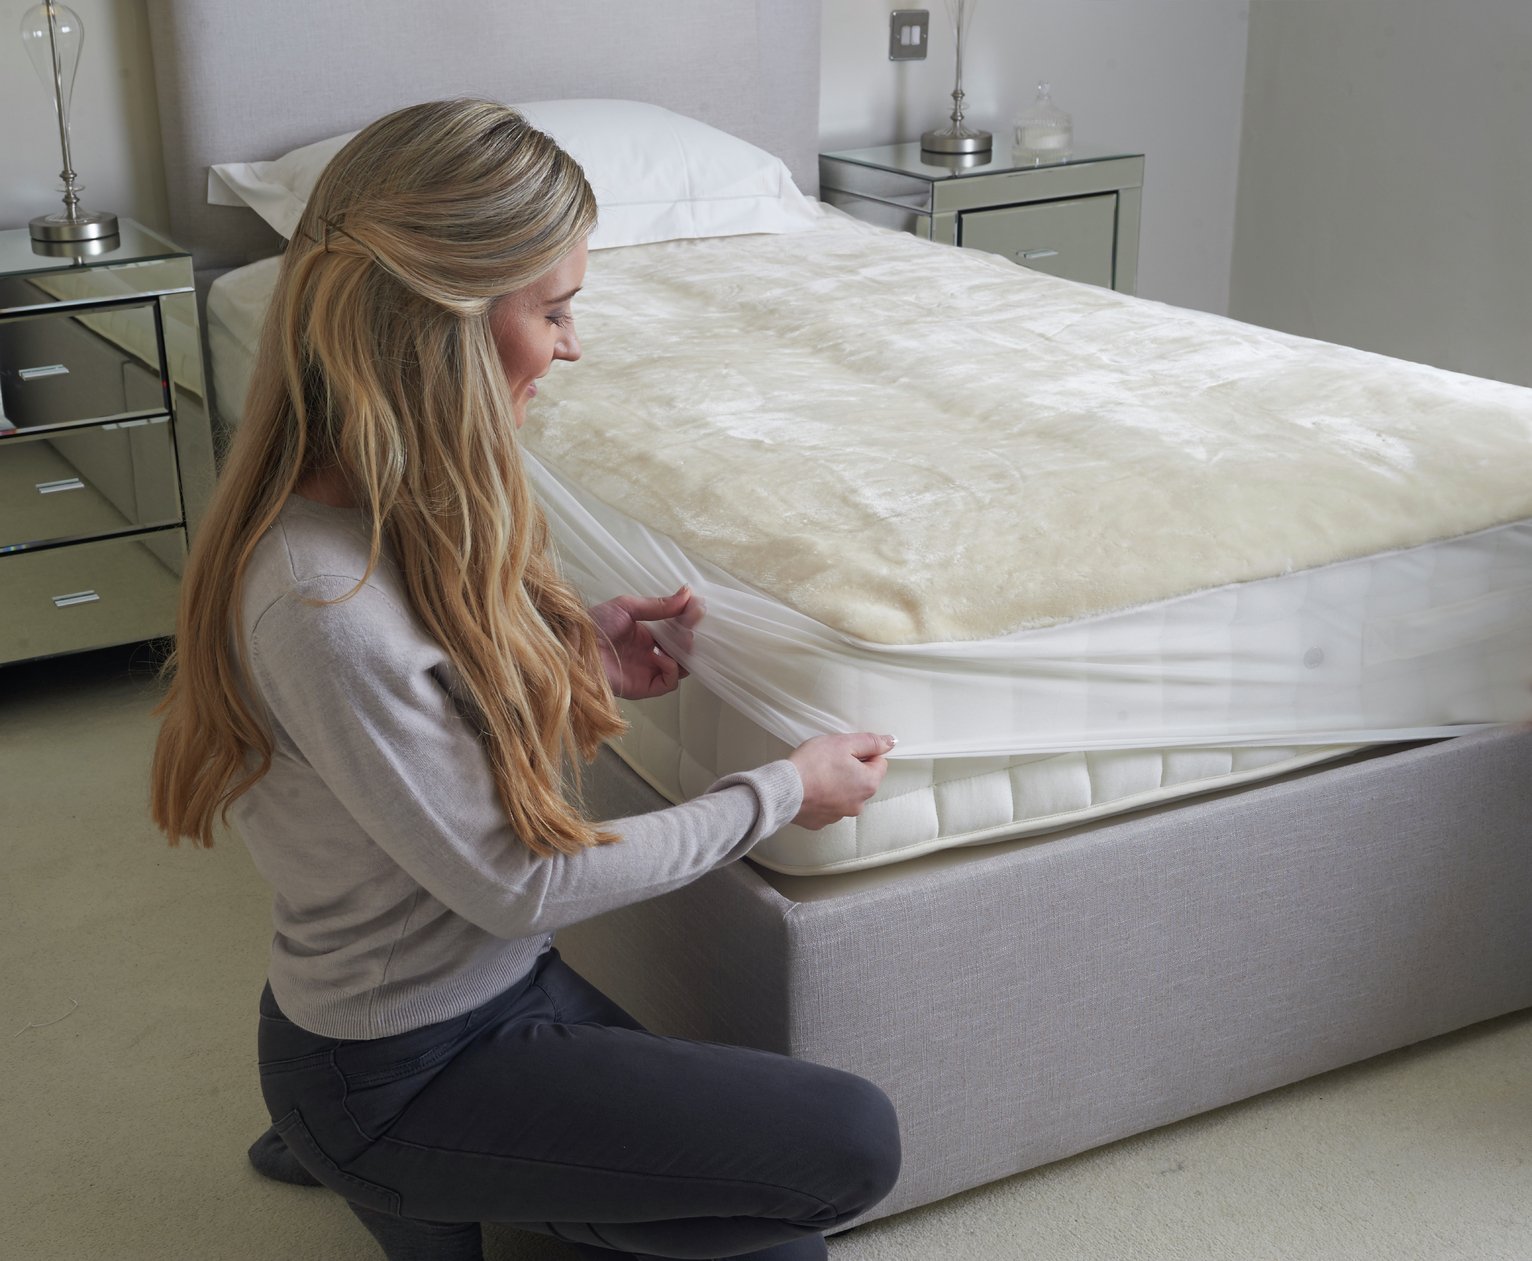 dreamland intelliheat mattress protector double dual